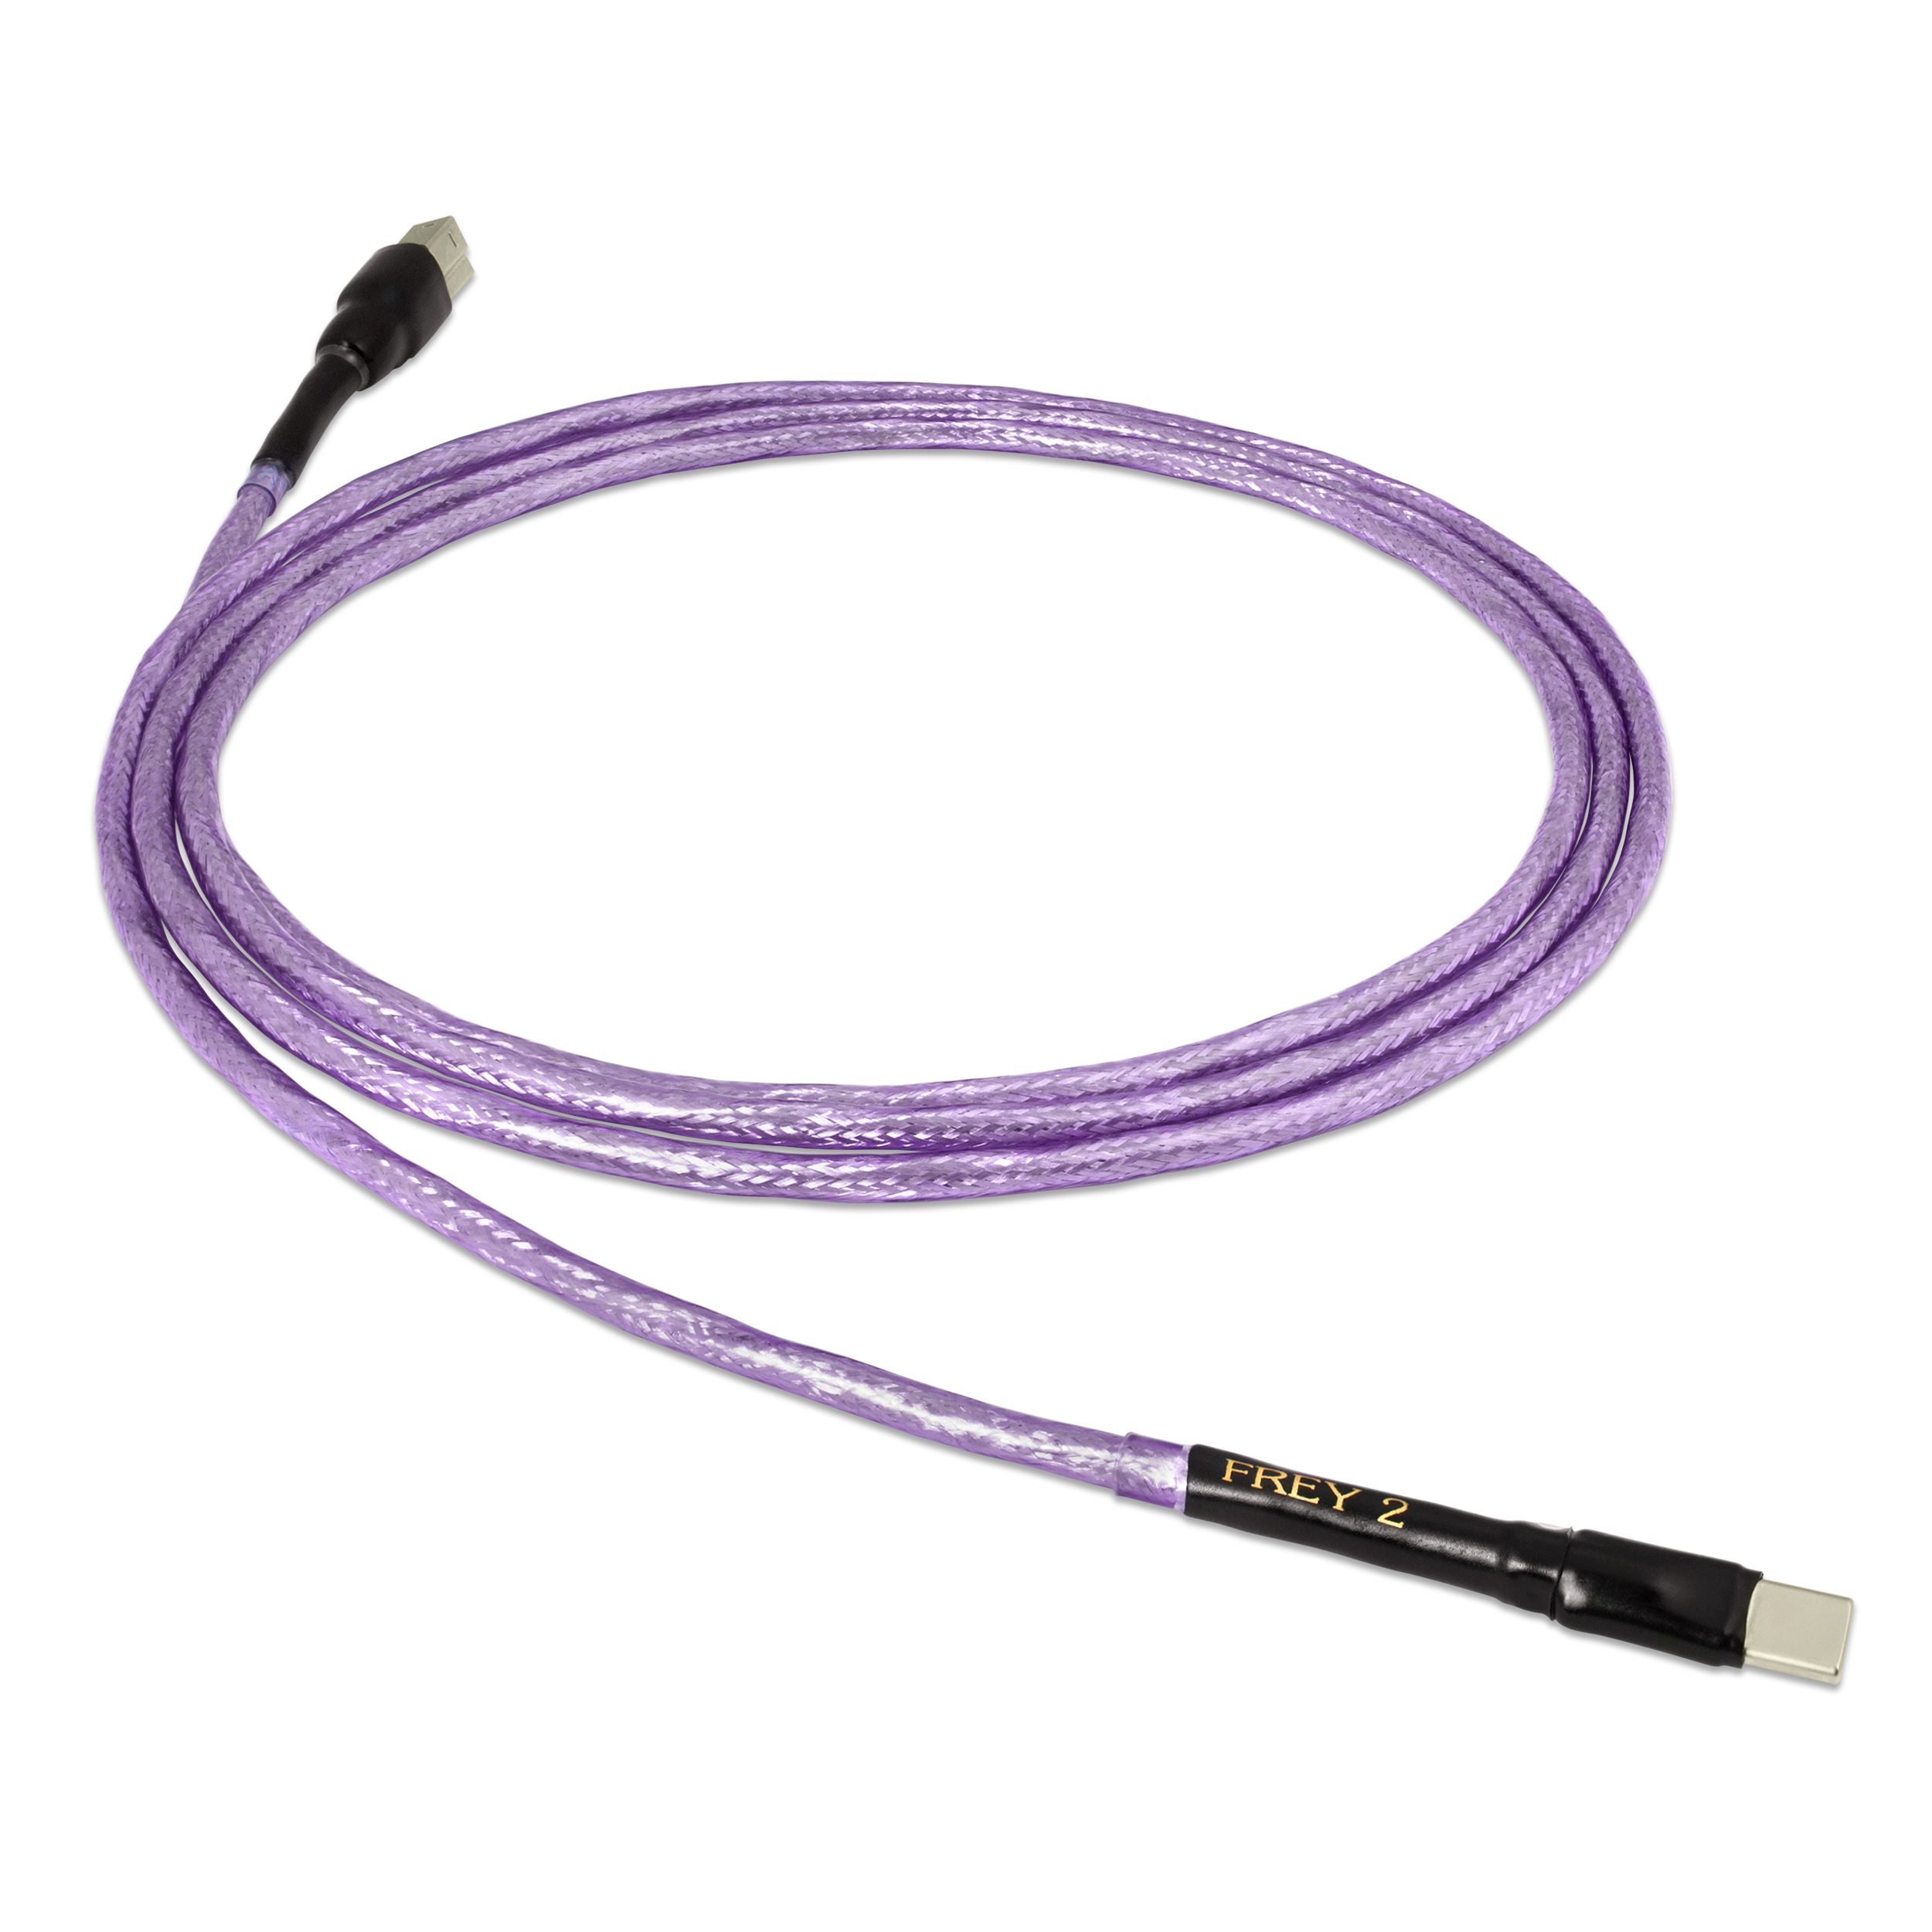 lg-Frey 2-USB Cable